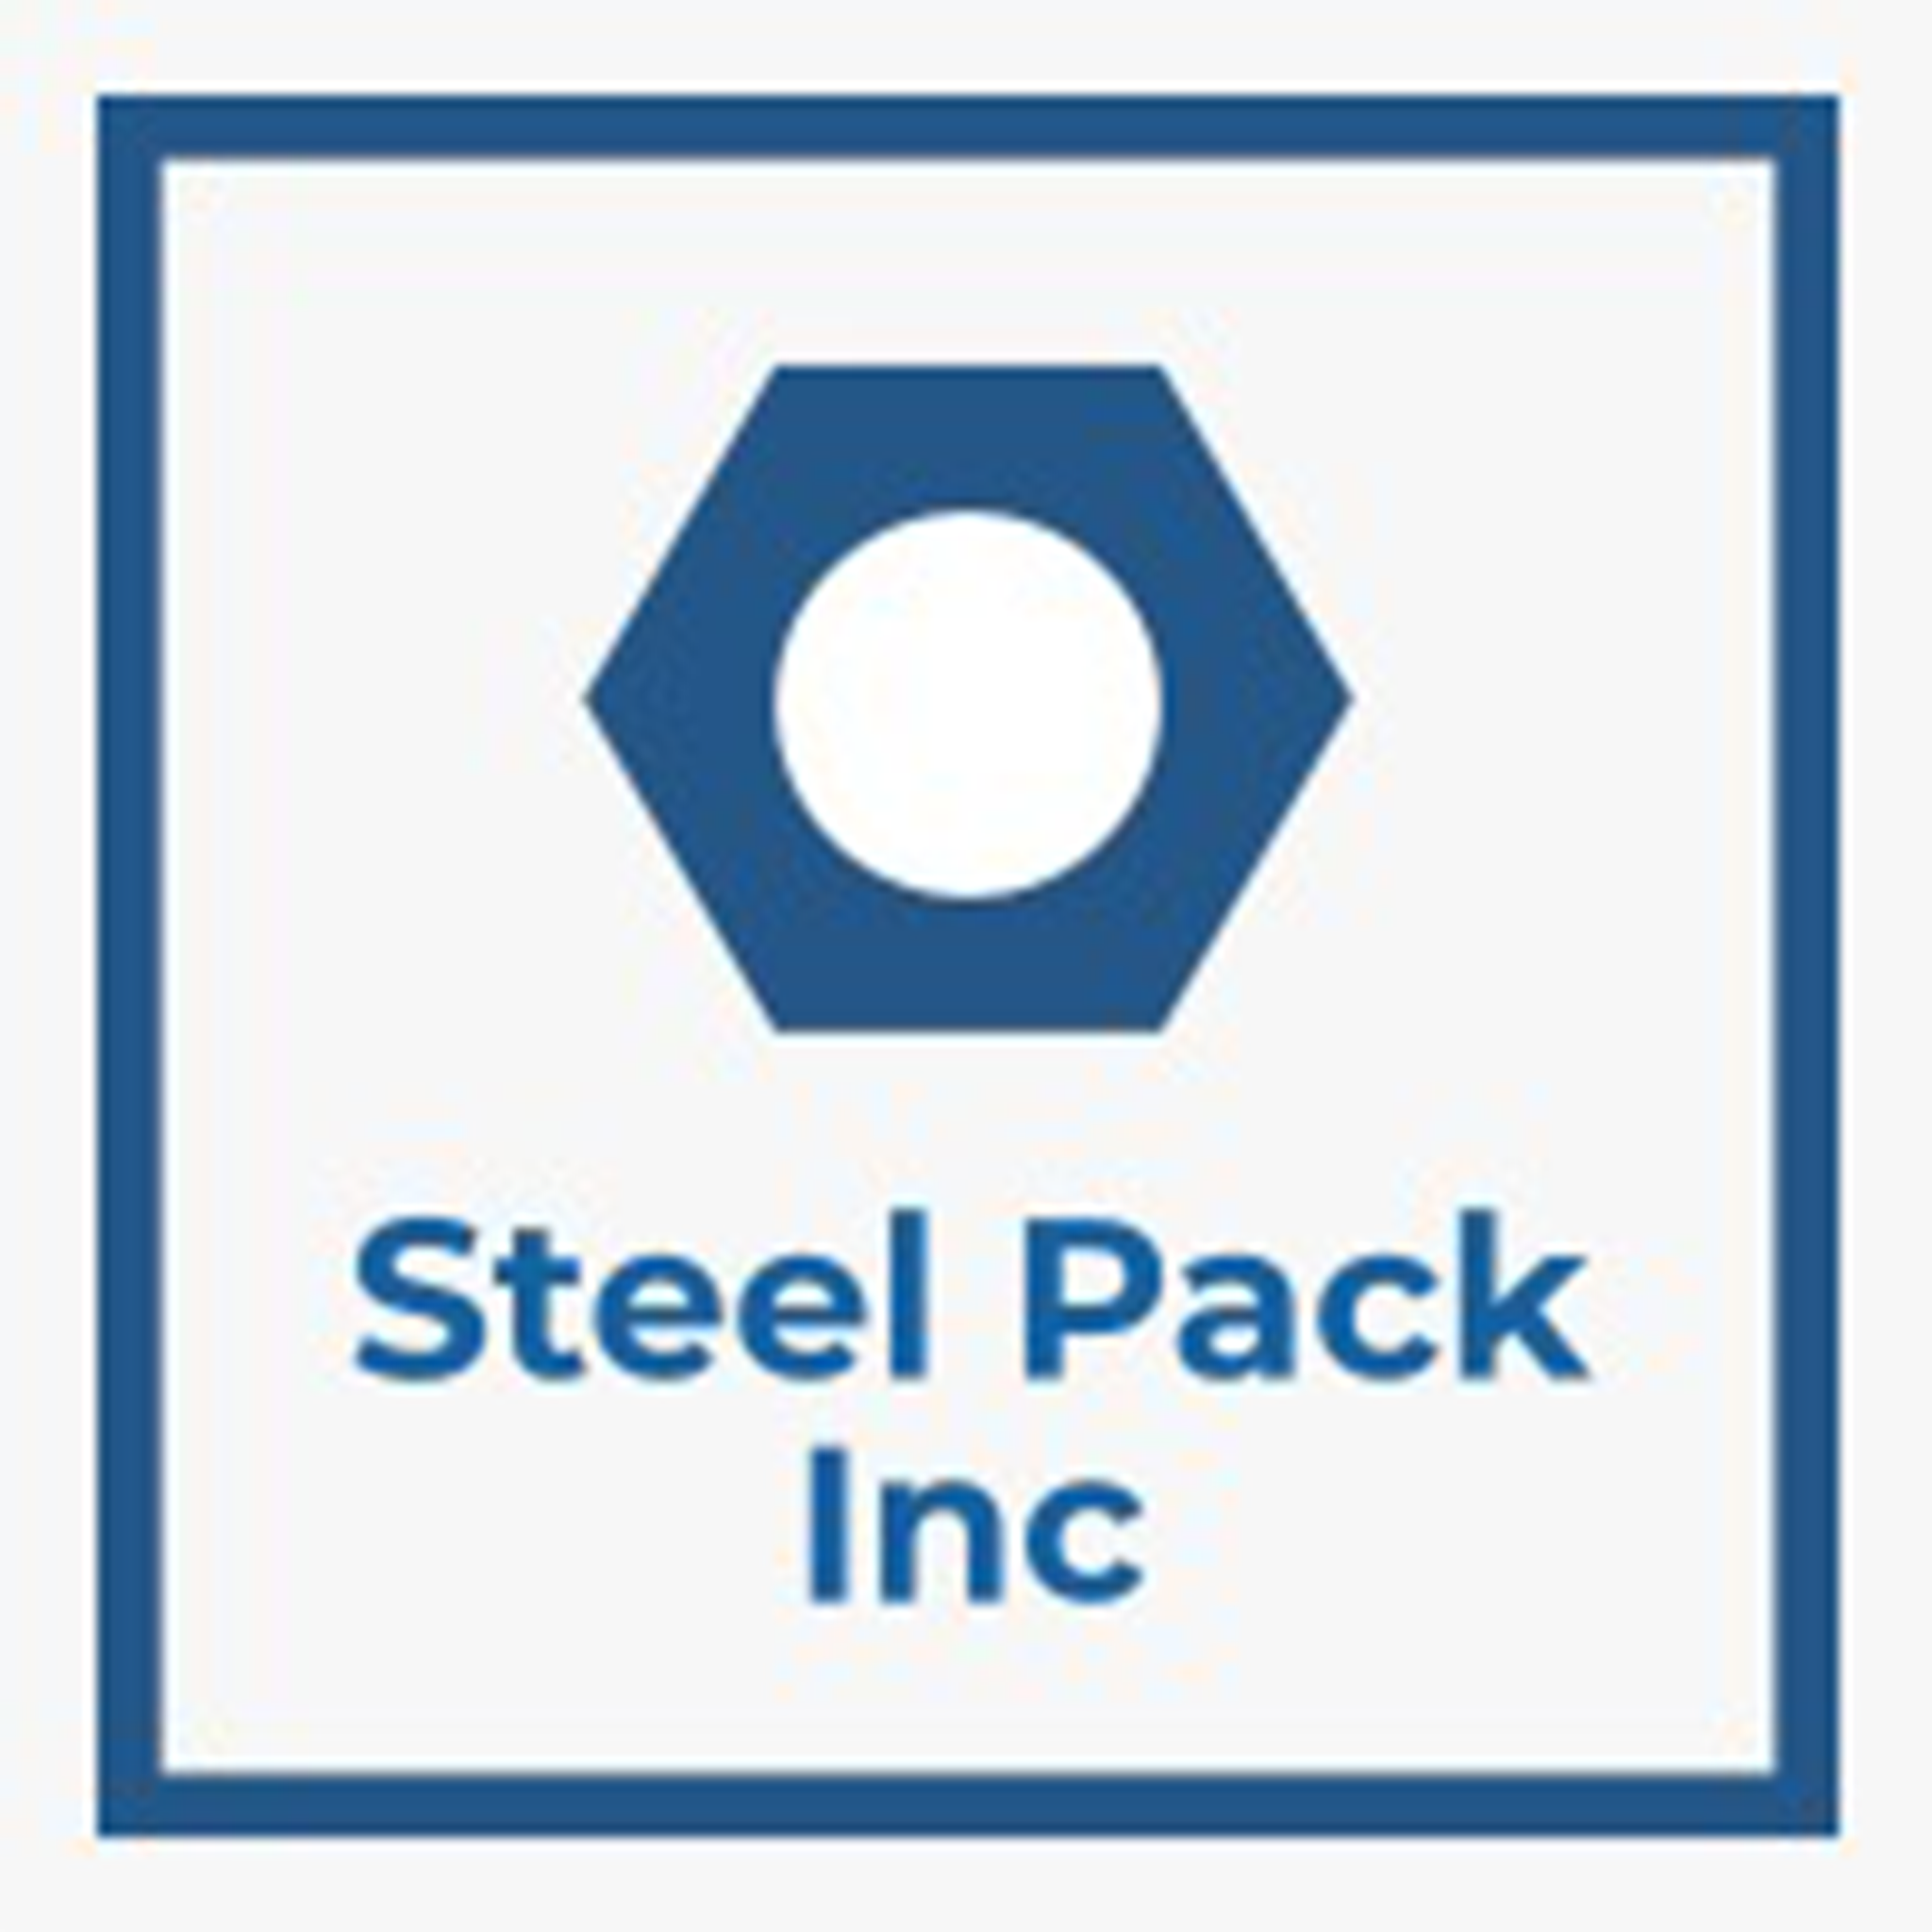 Steel pack inc Logo